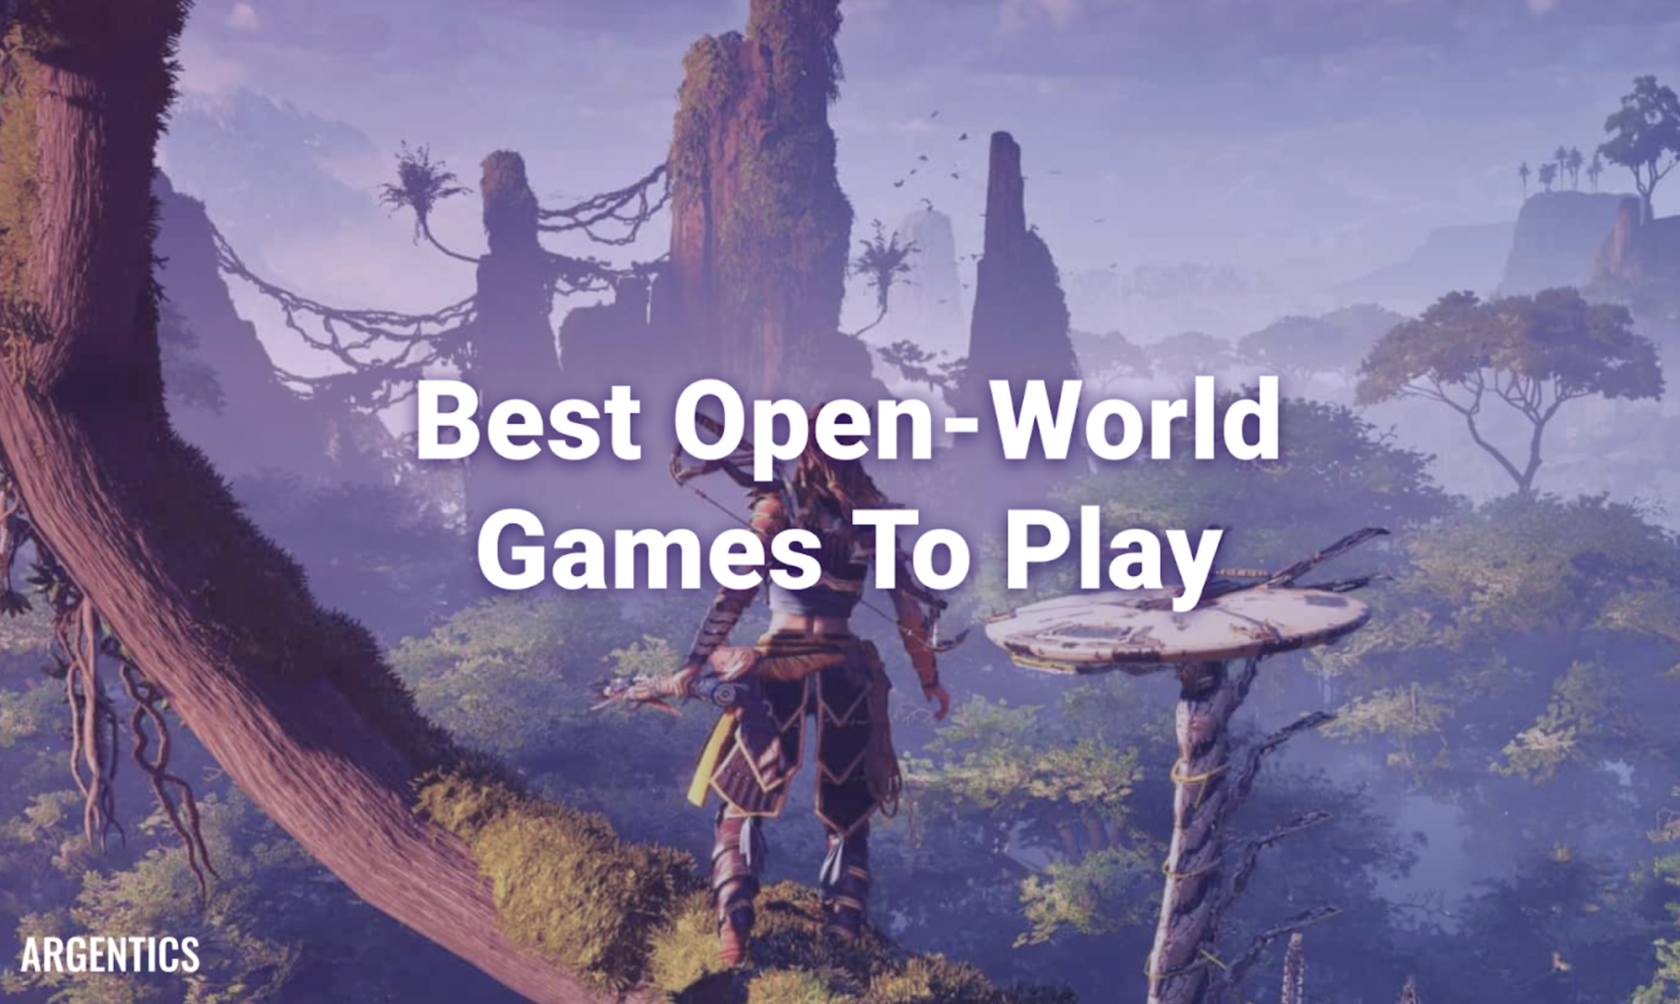 The best open world games